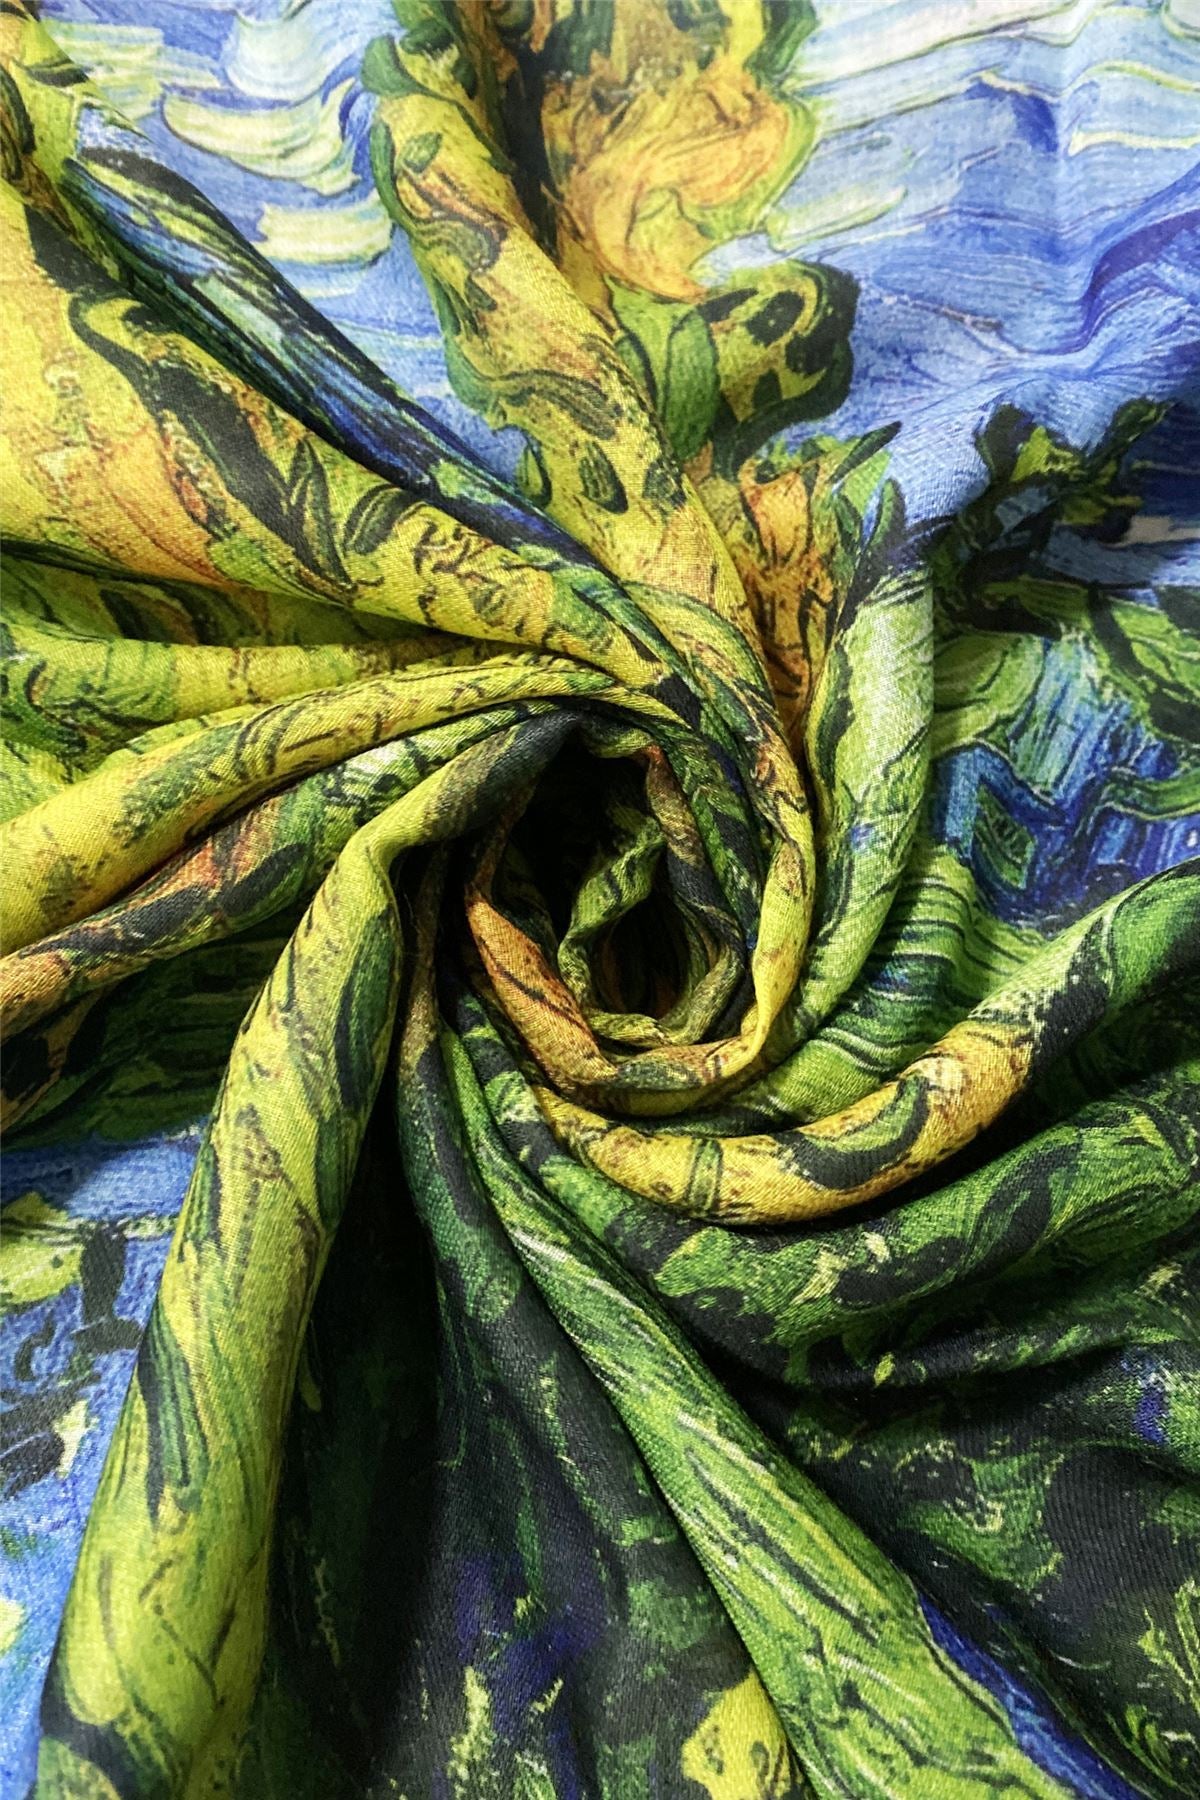 Bufanda-Mantón de algodón, 70 cm x 180 cm, Van Gogh - Dos álamos